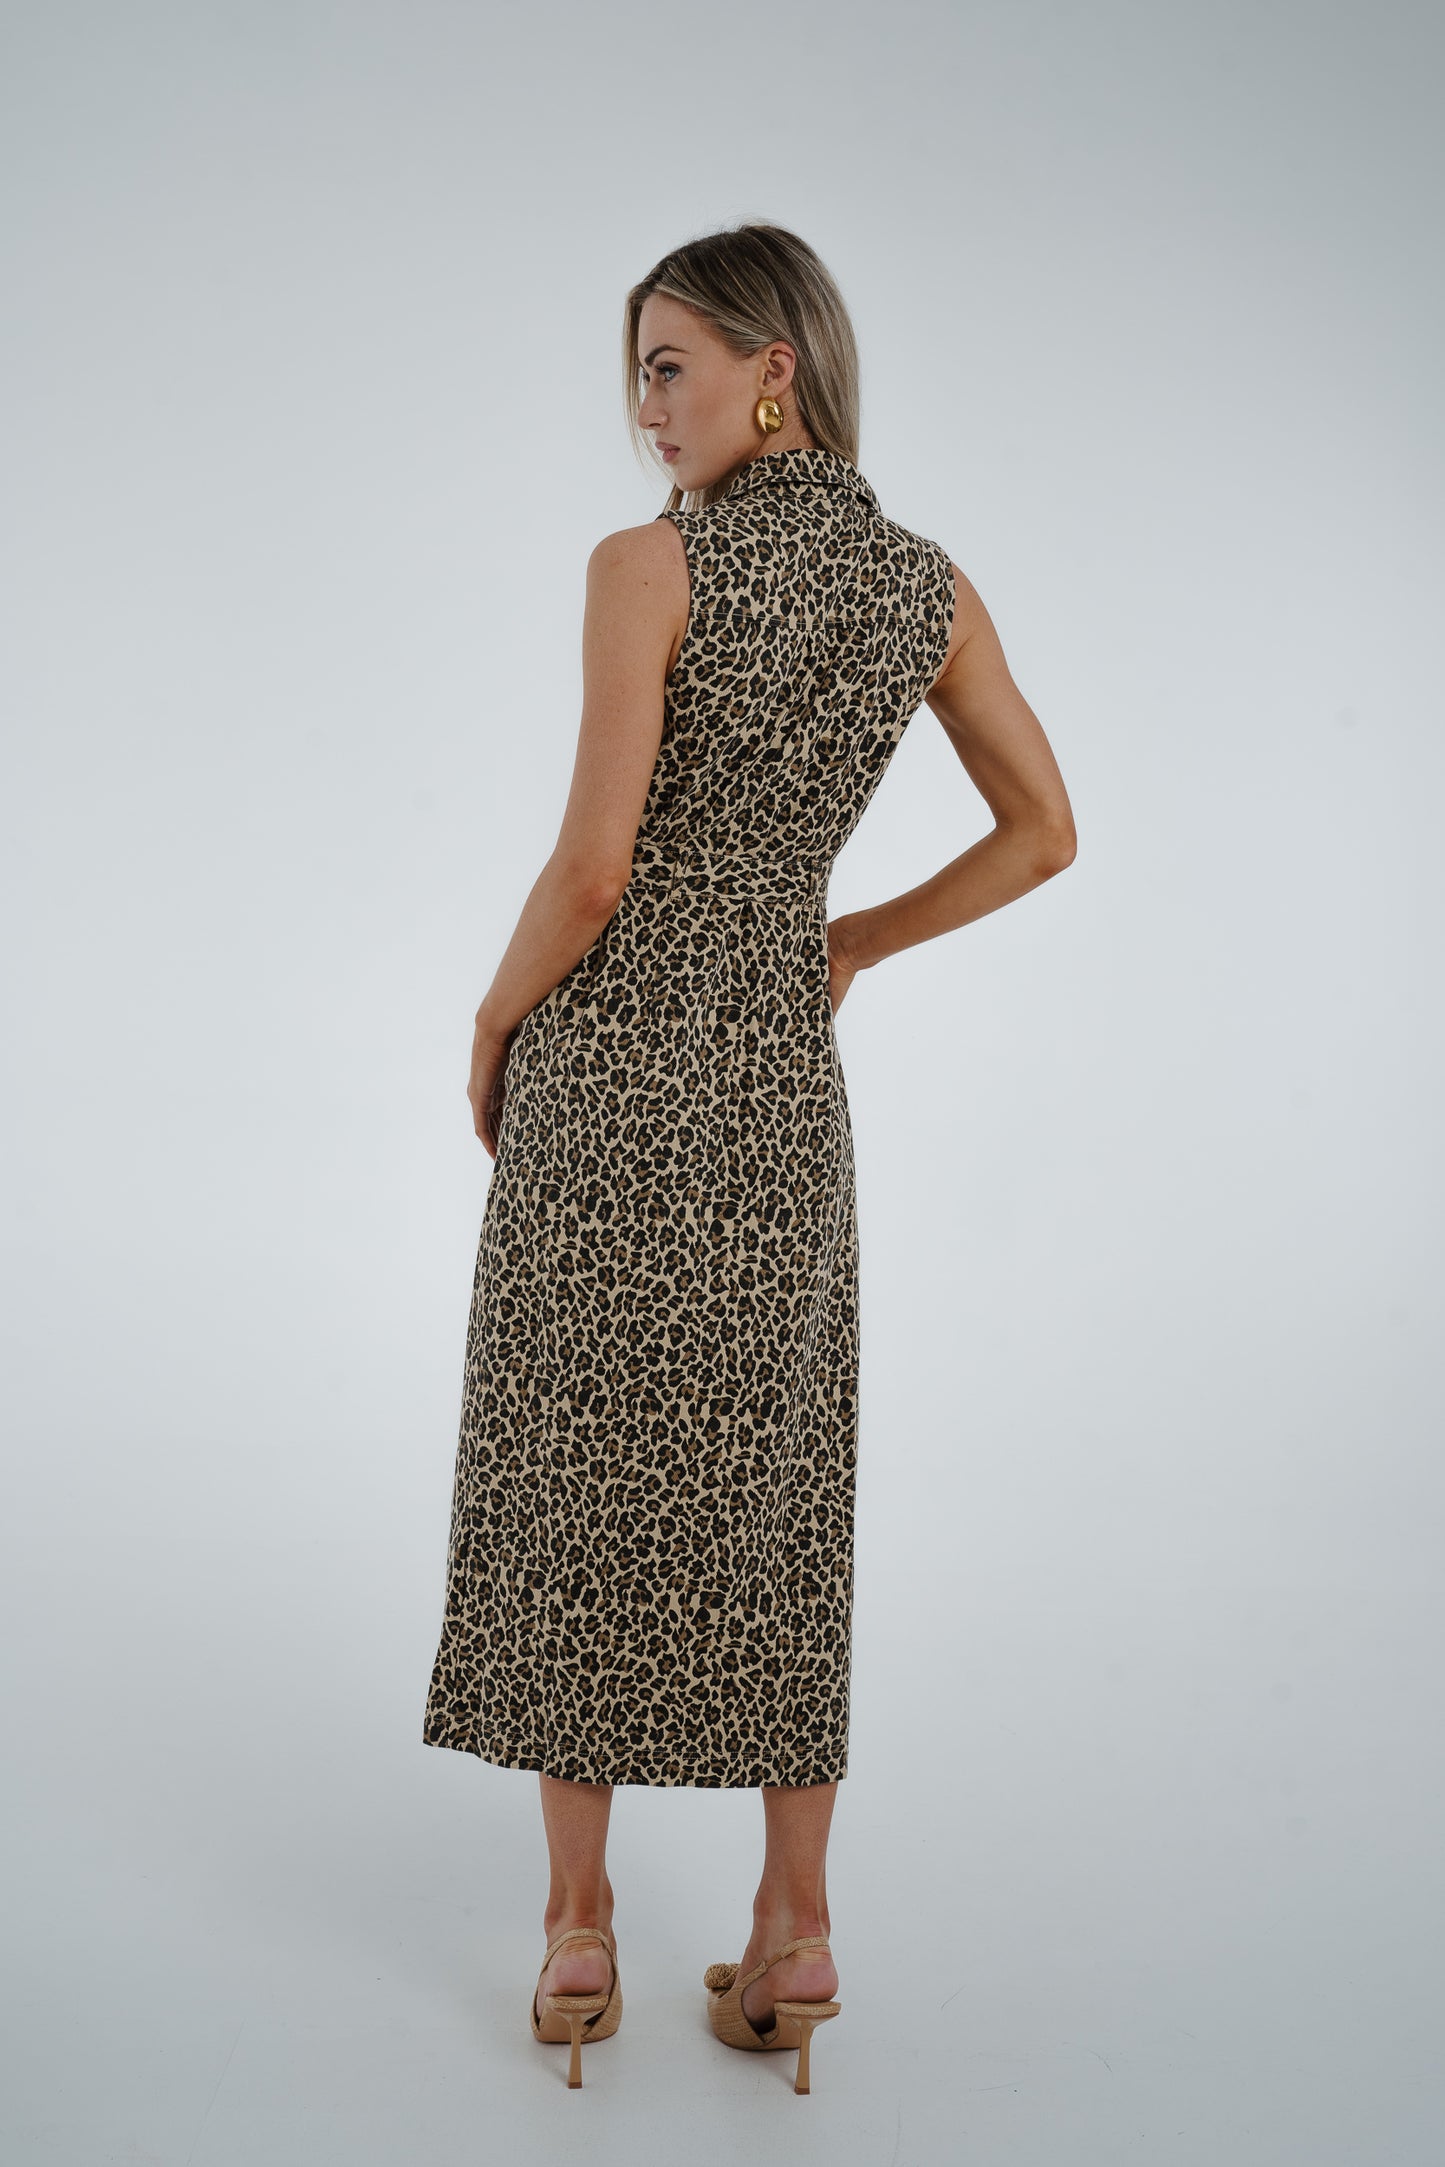 Cora Sleeveless Dress In Leopard Print